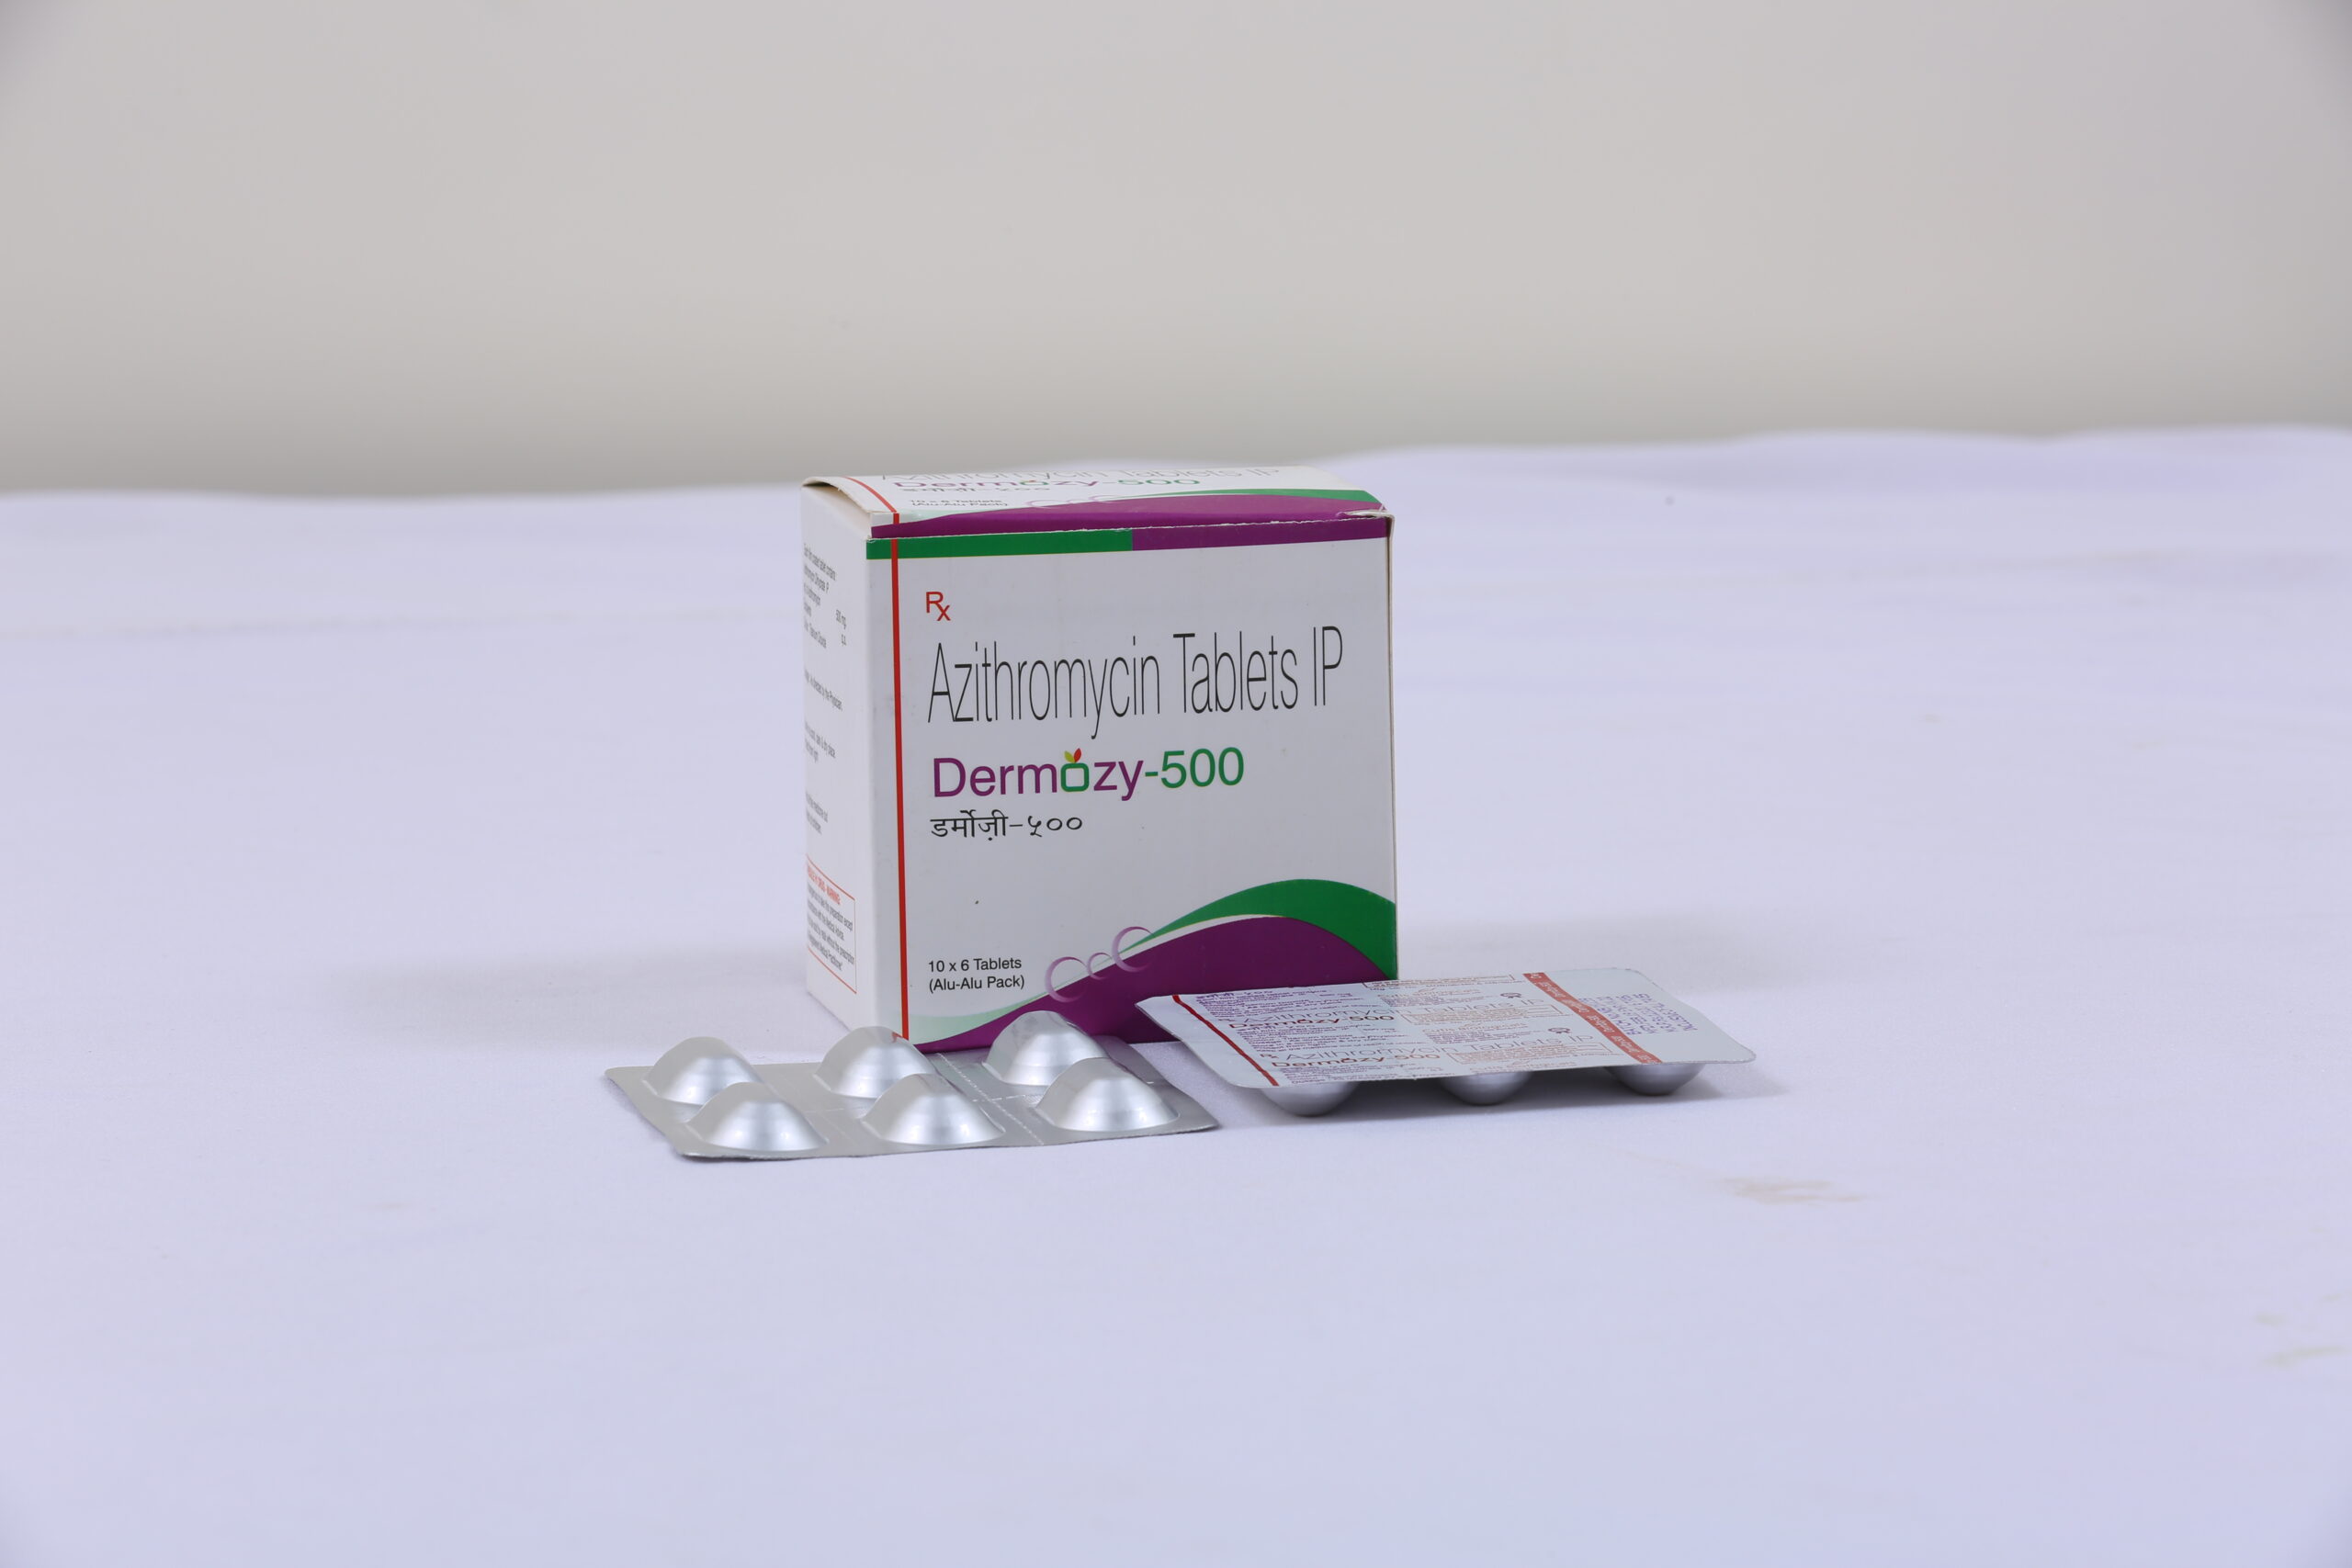 DERMOZY-500 (Azithromycin 500mg)